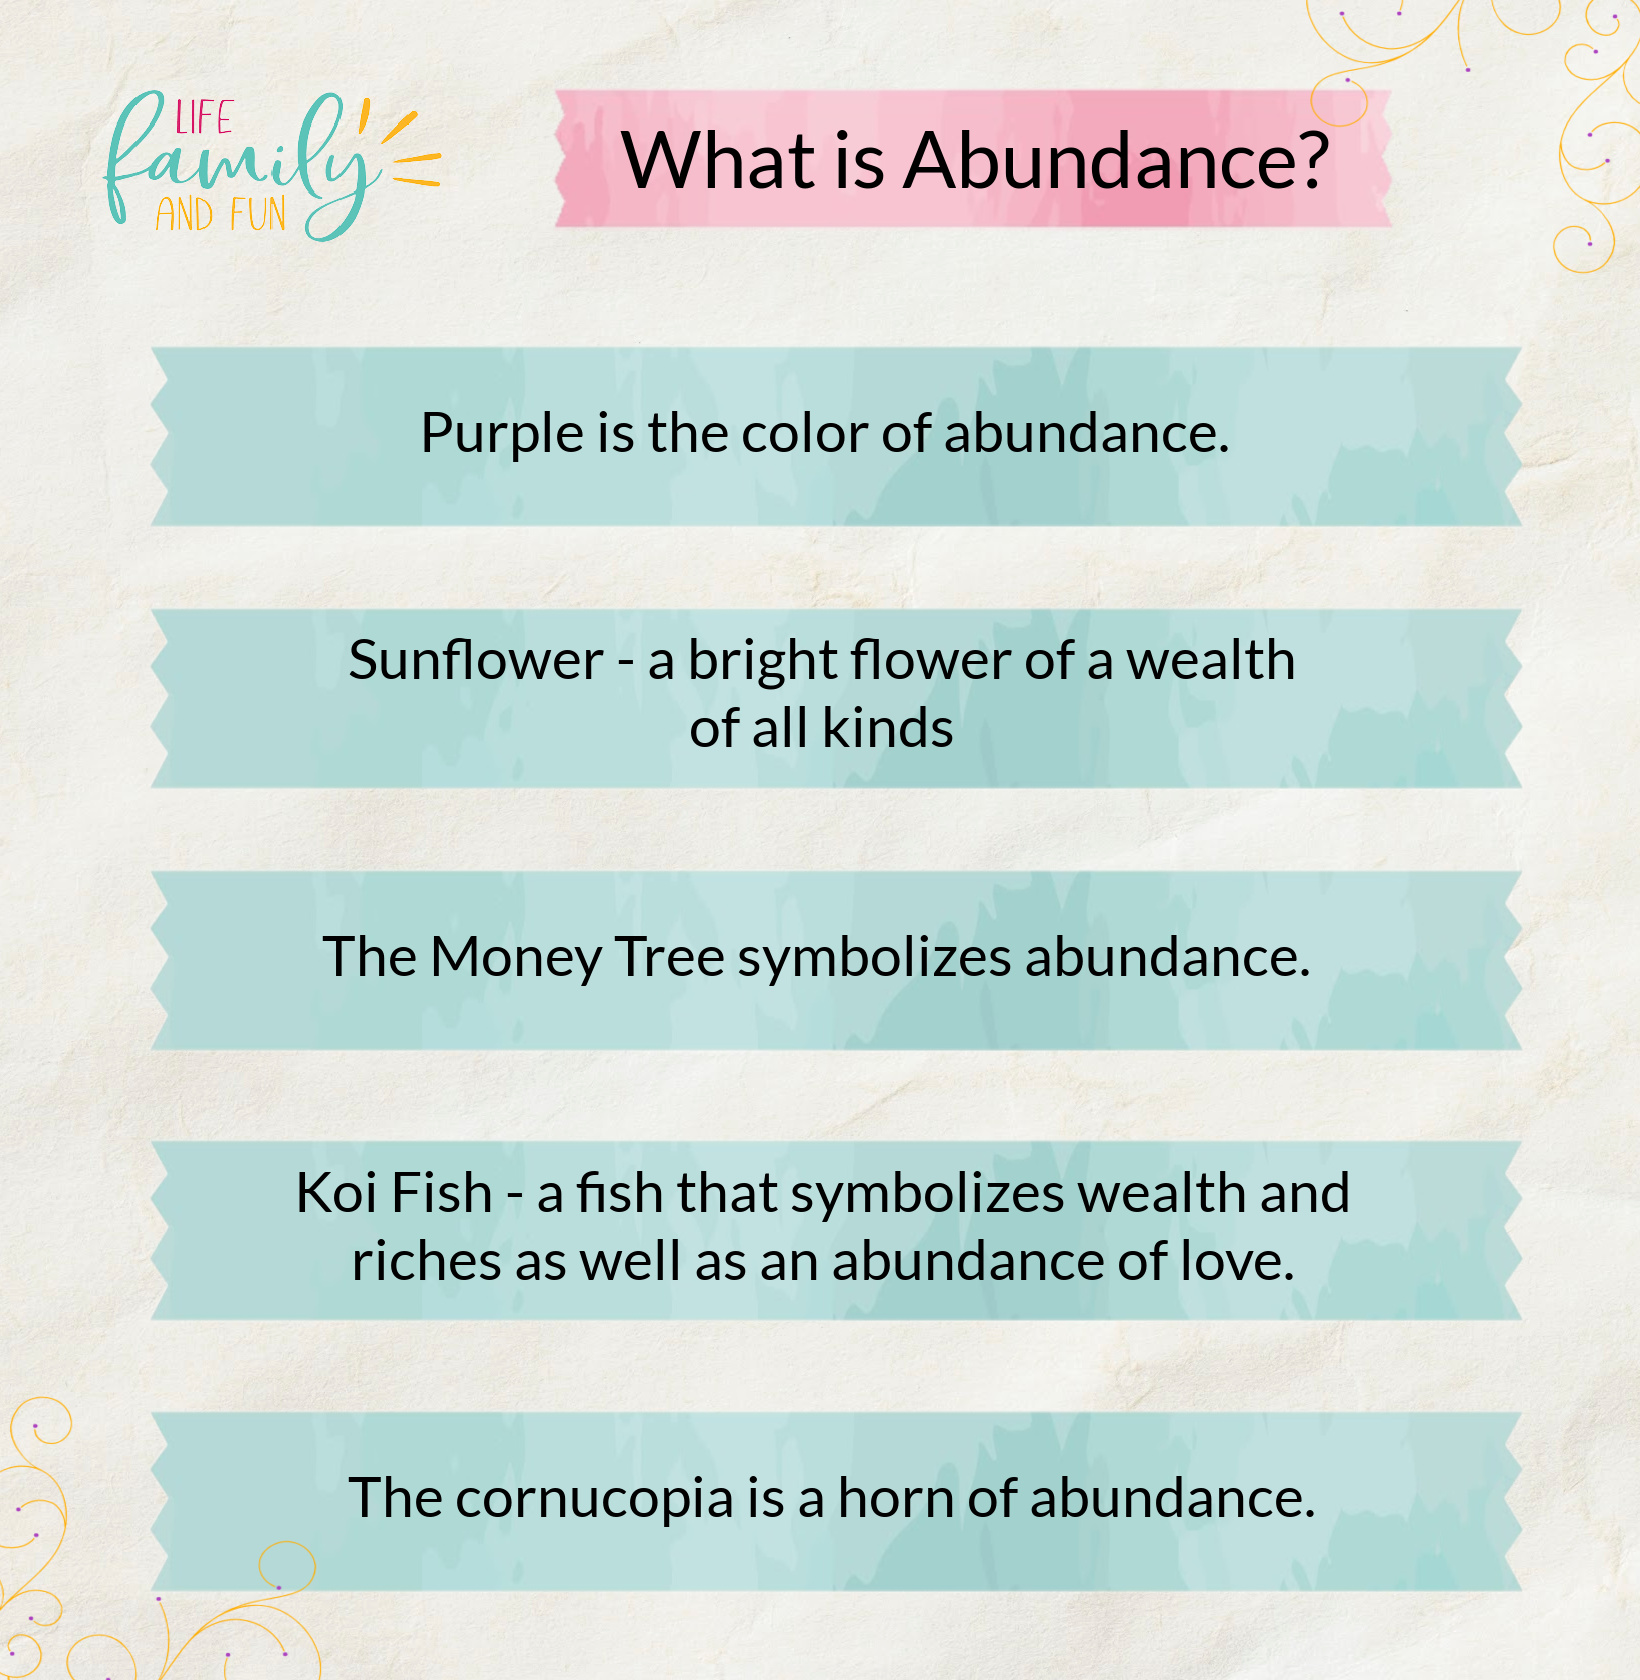 What is Abundance?